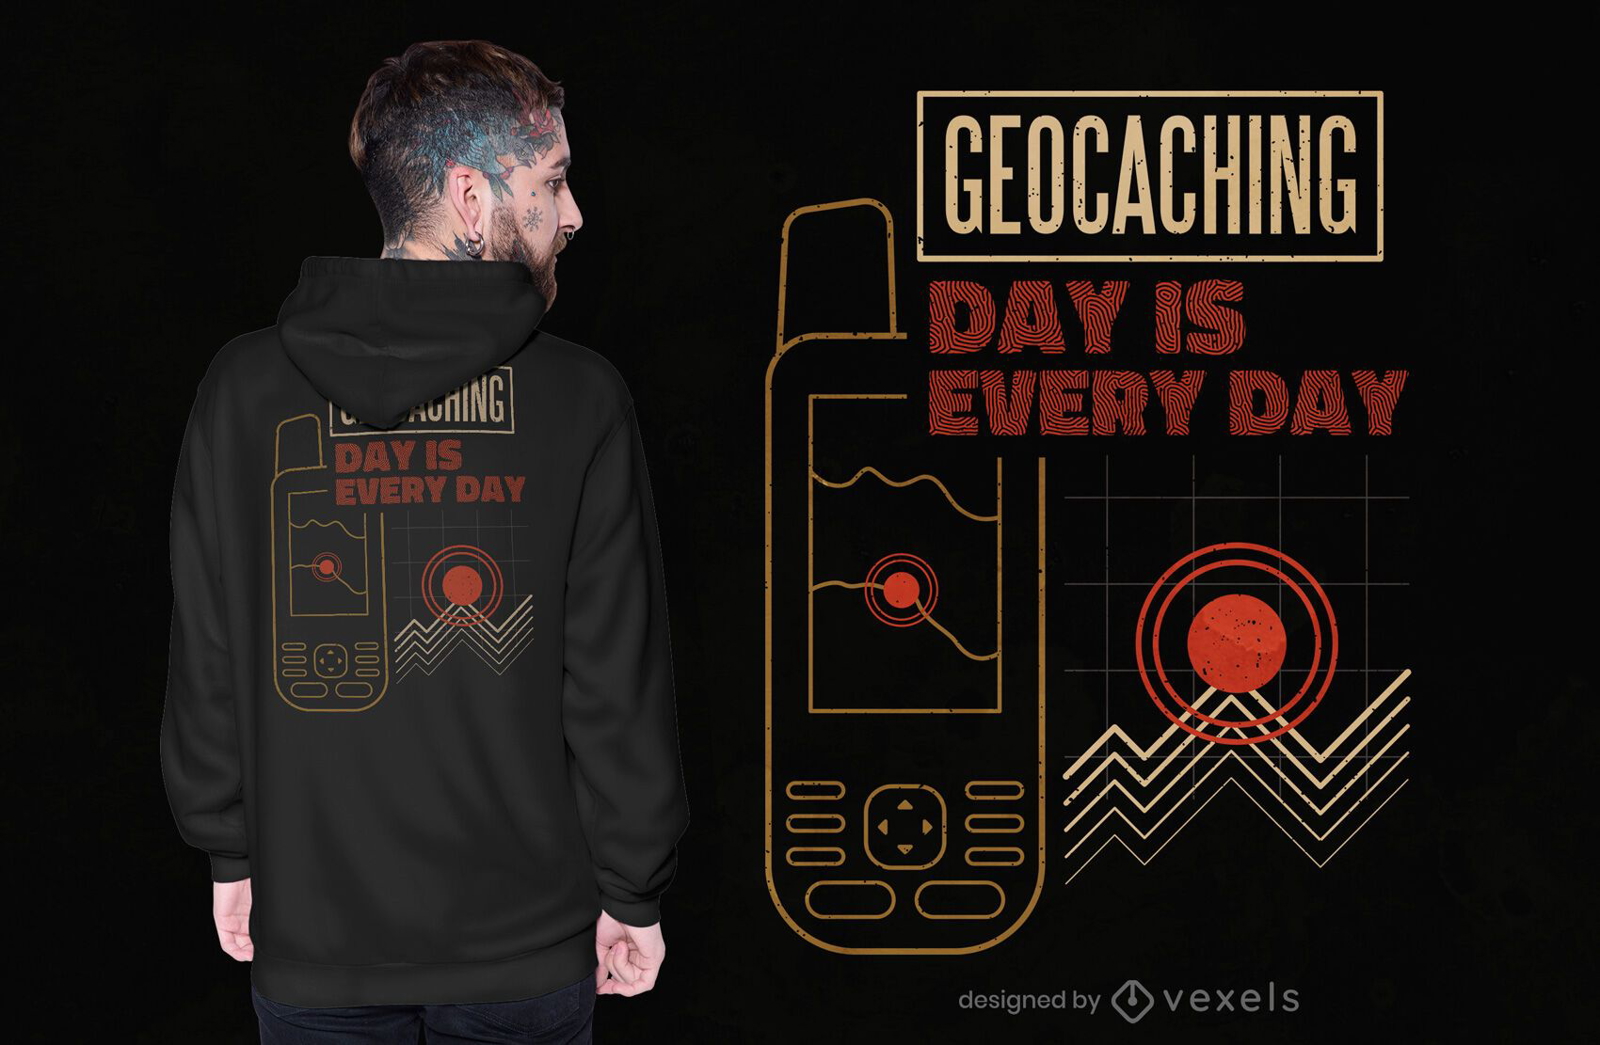 Geocaching day t-shirt design